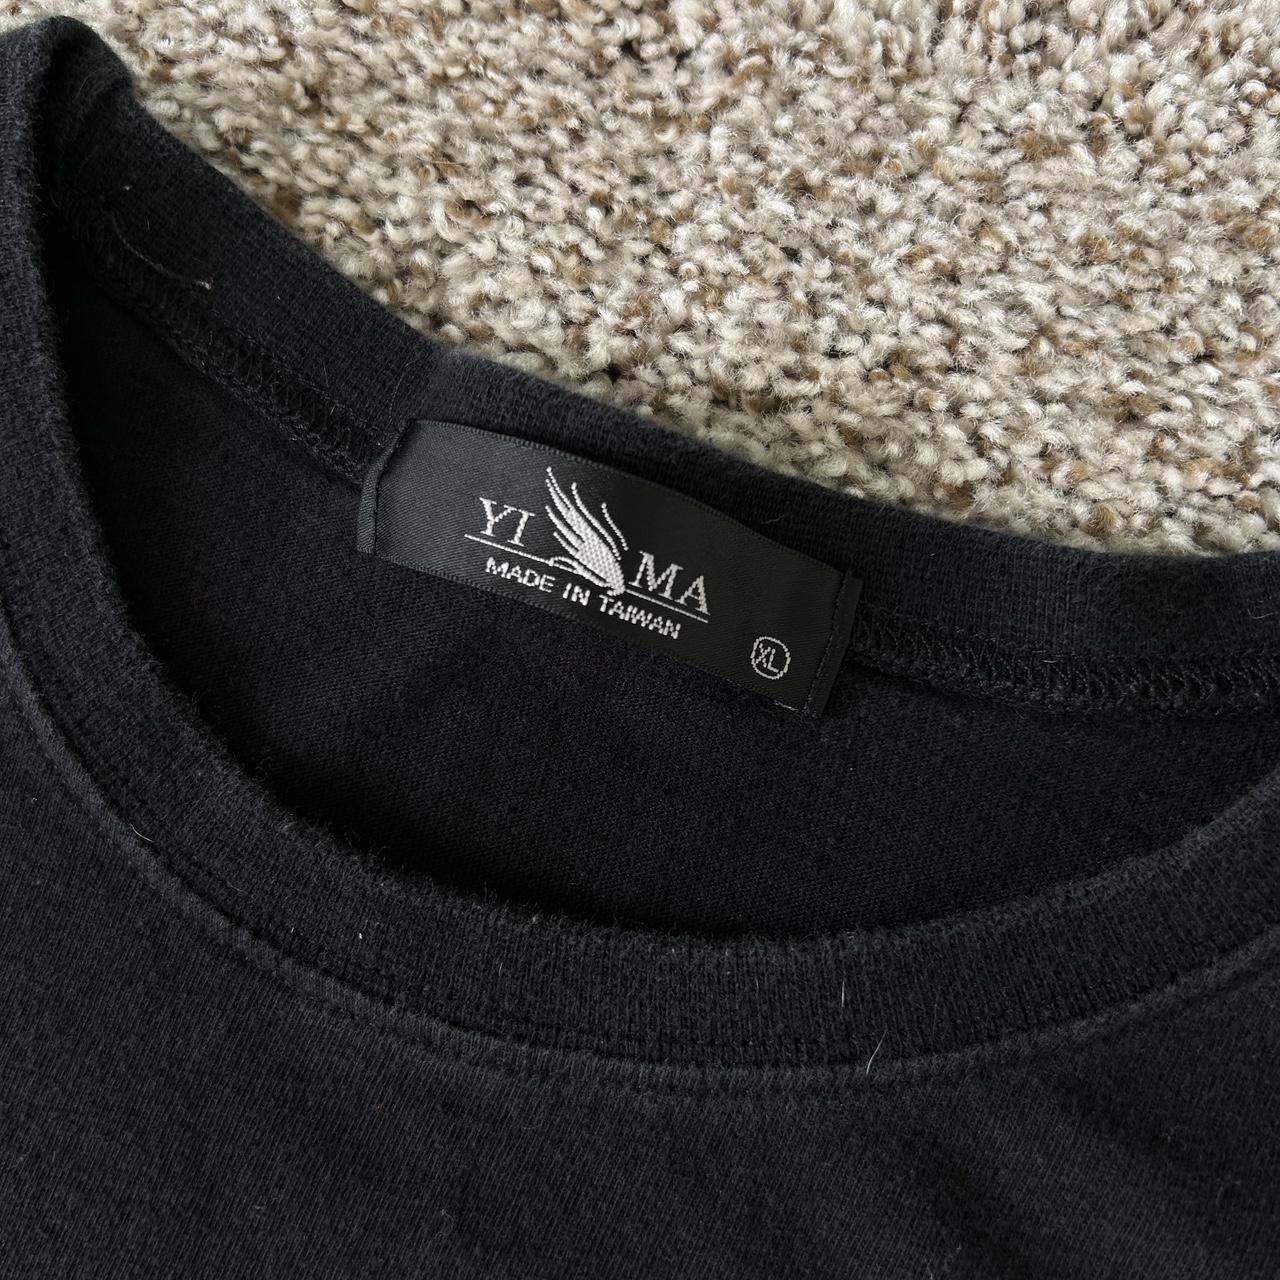 XL black shirt with Supreme logo and My Neighbor... - Depop